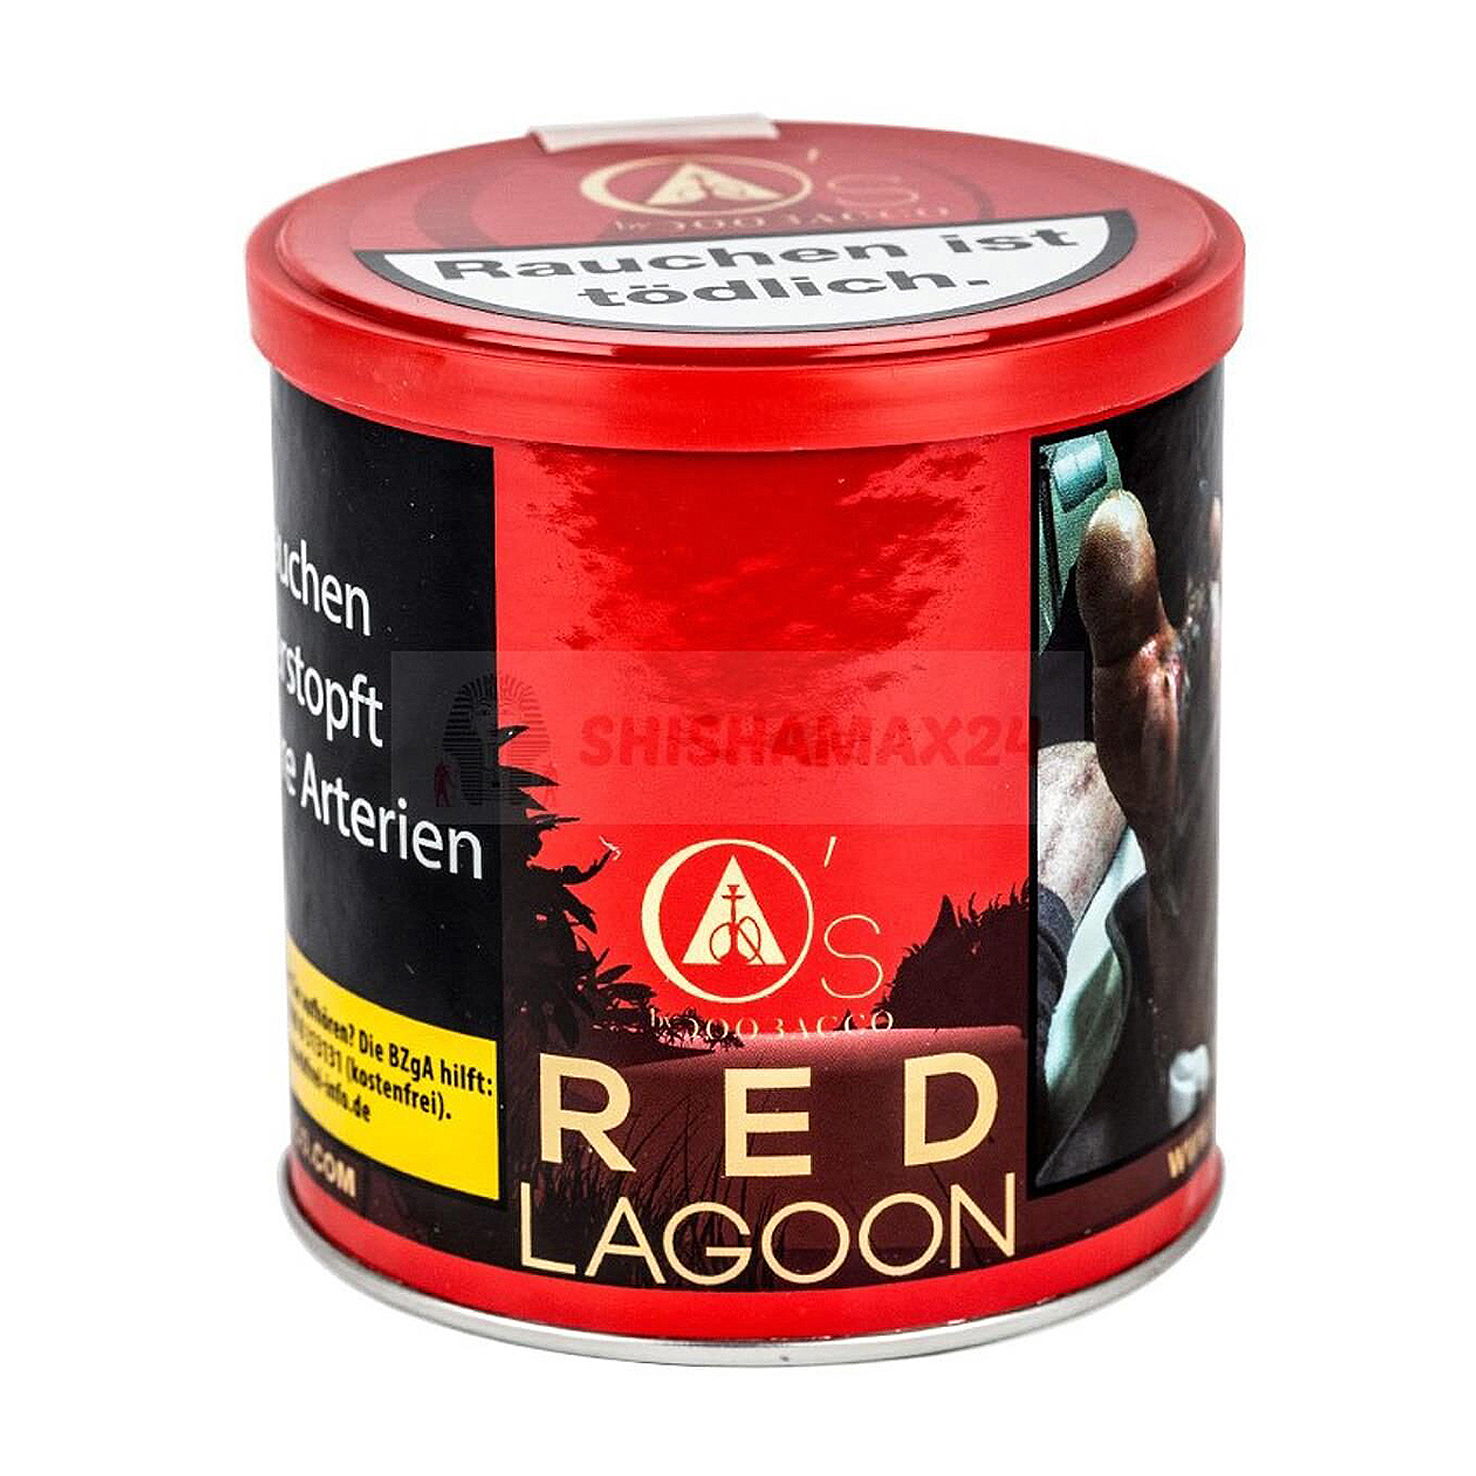 O's Tobacco Red Lagoon